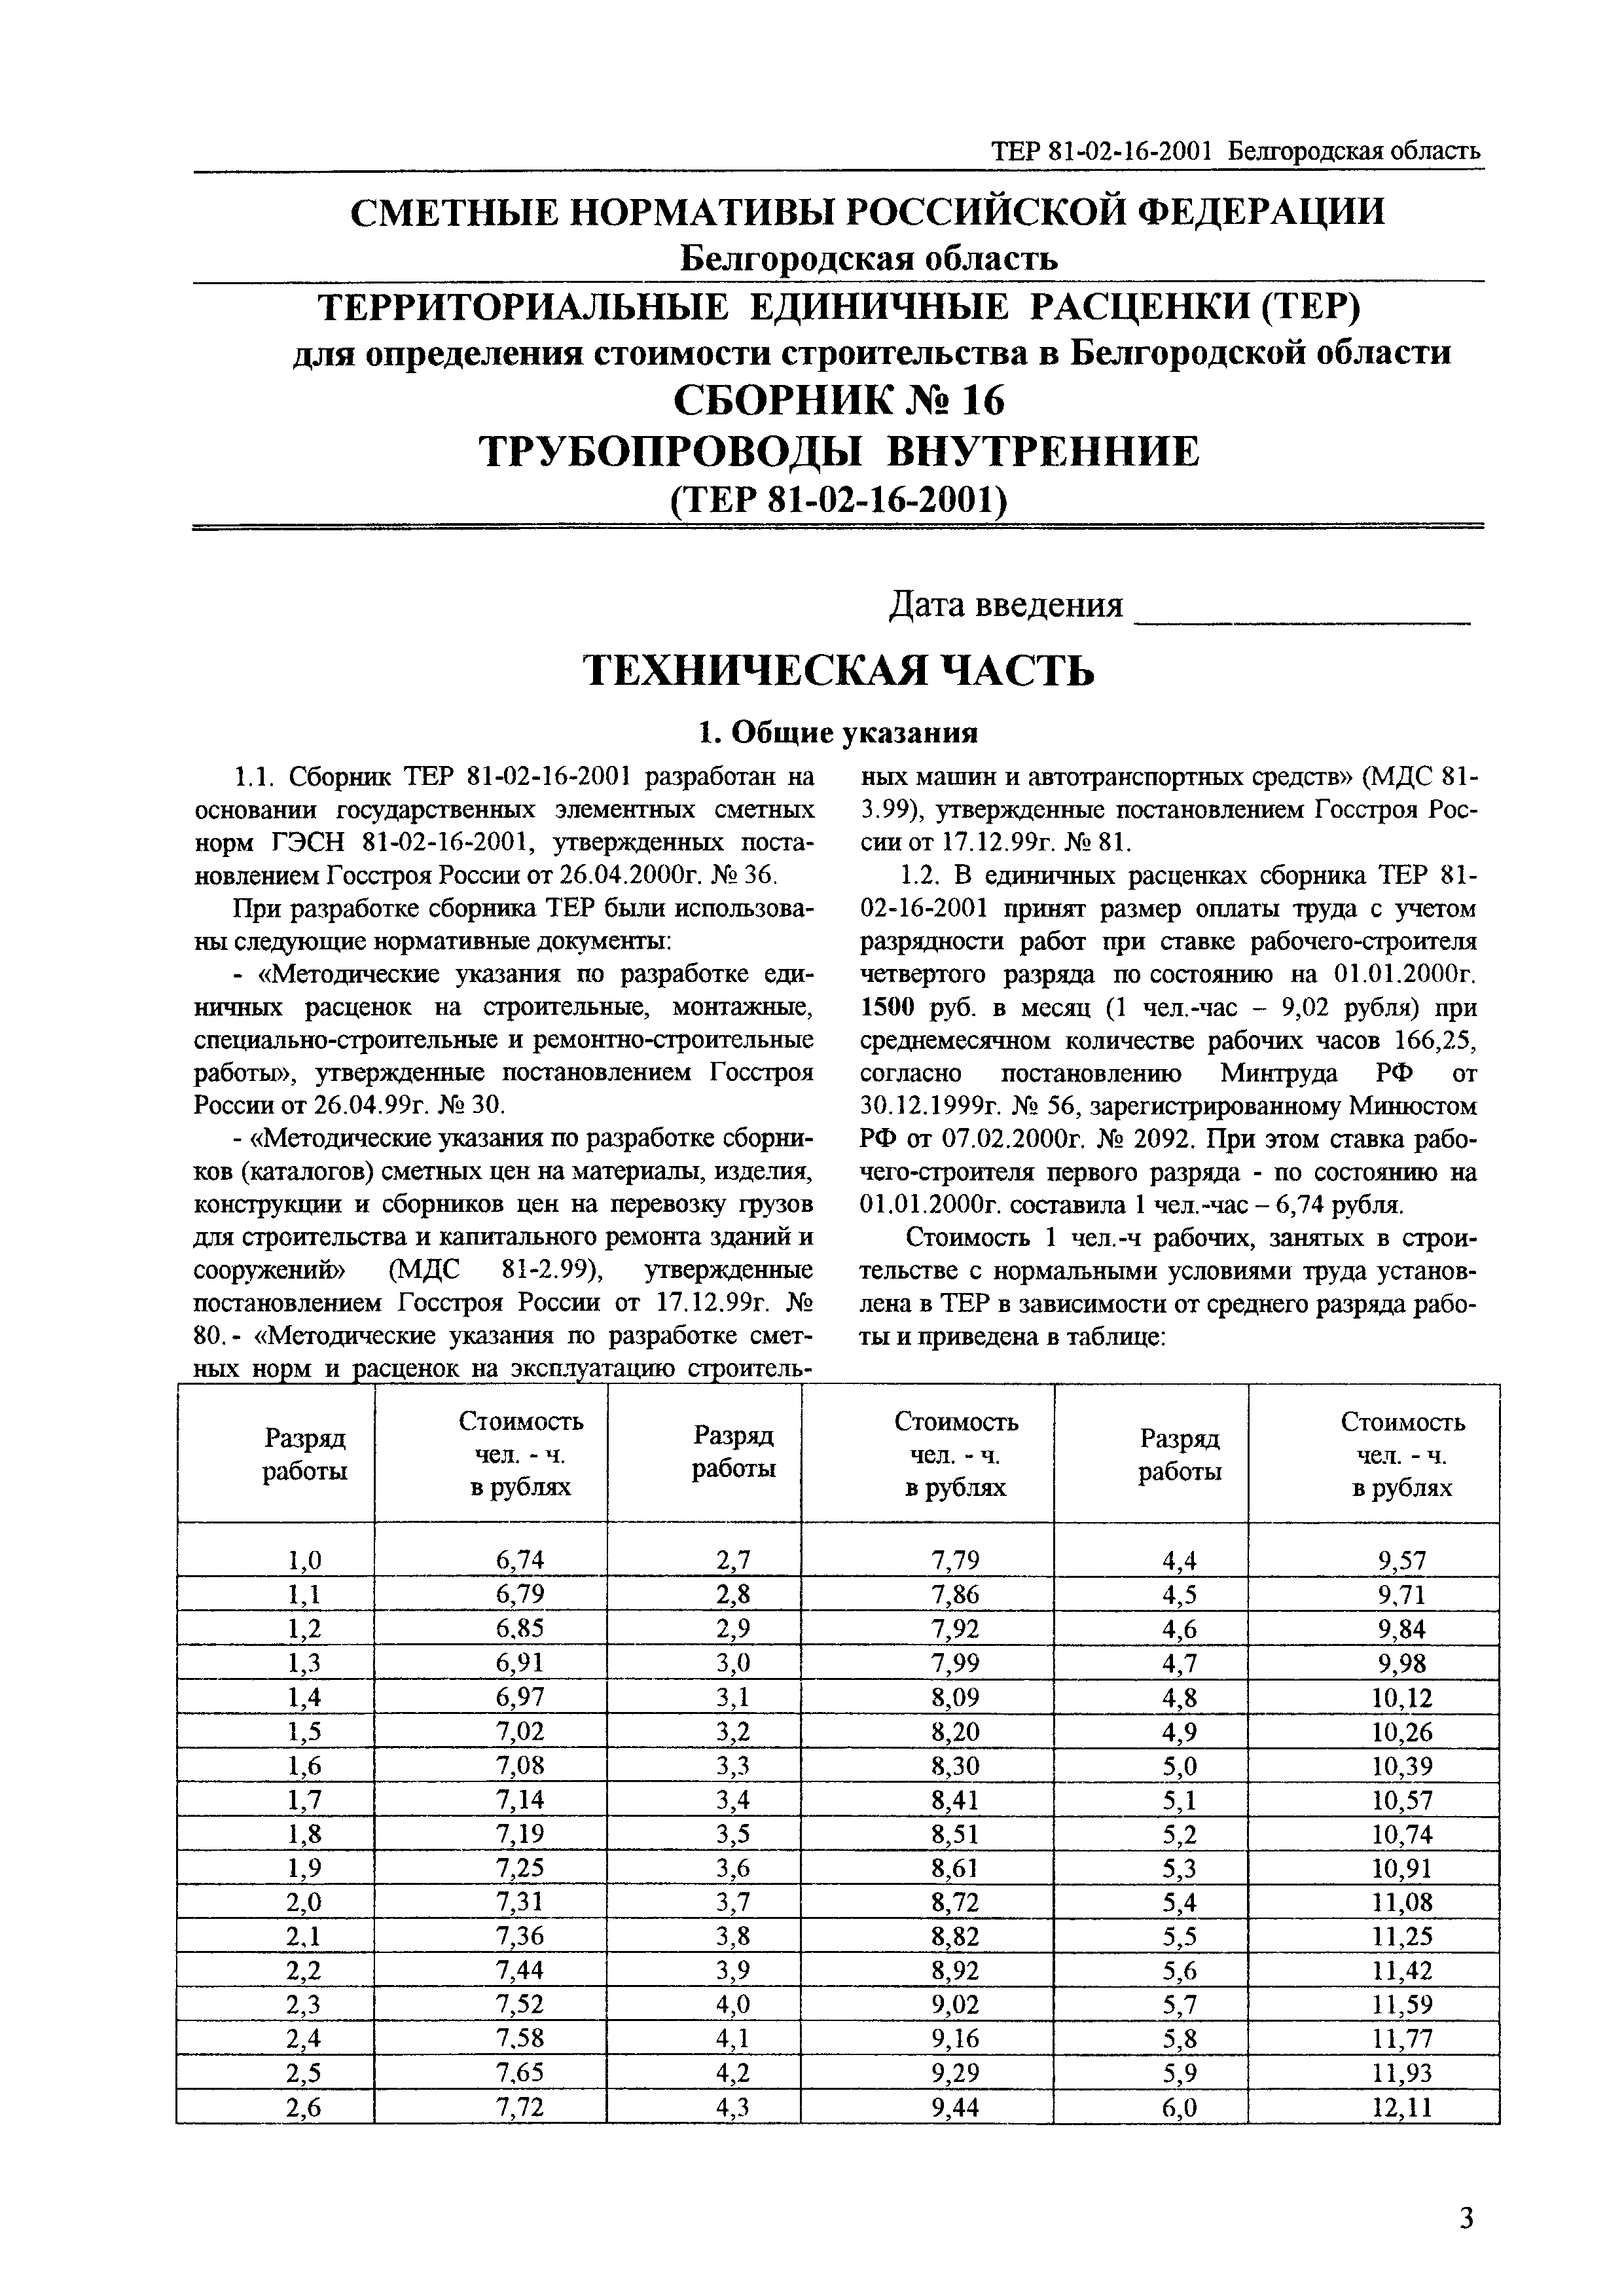 ТЕР 2001-16 Белгородской области